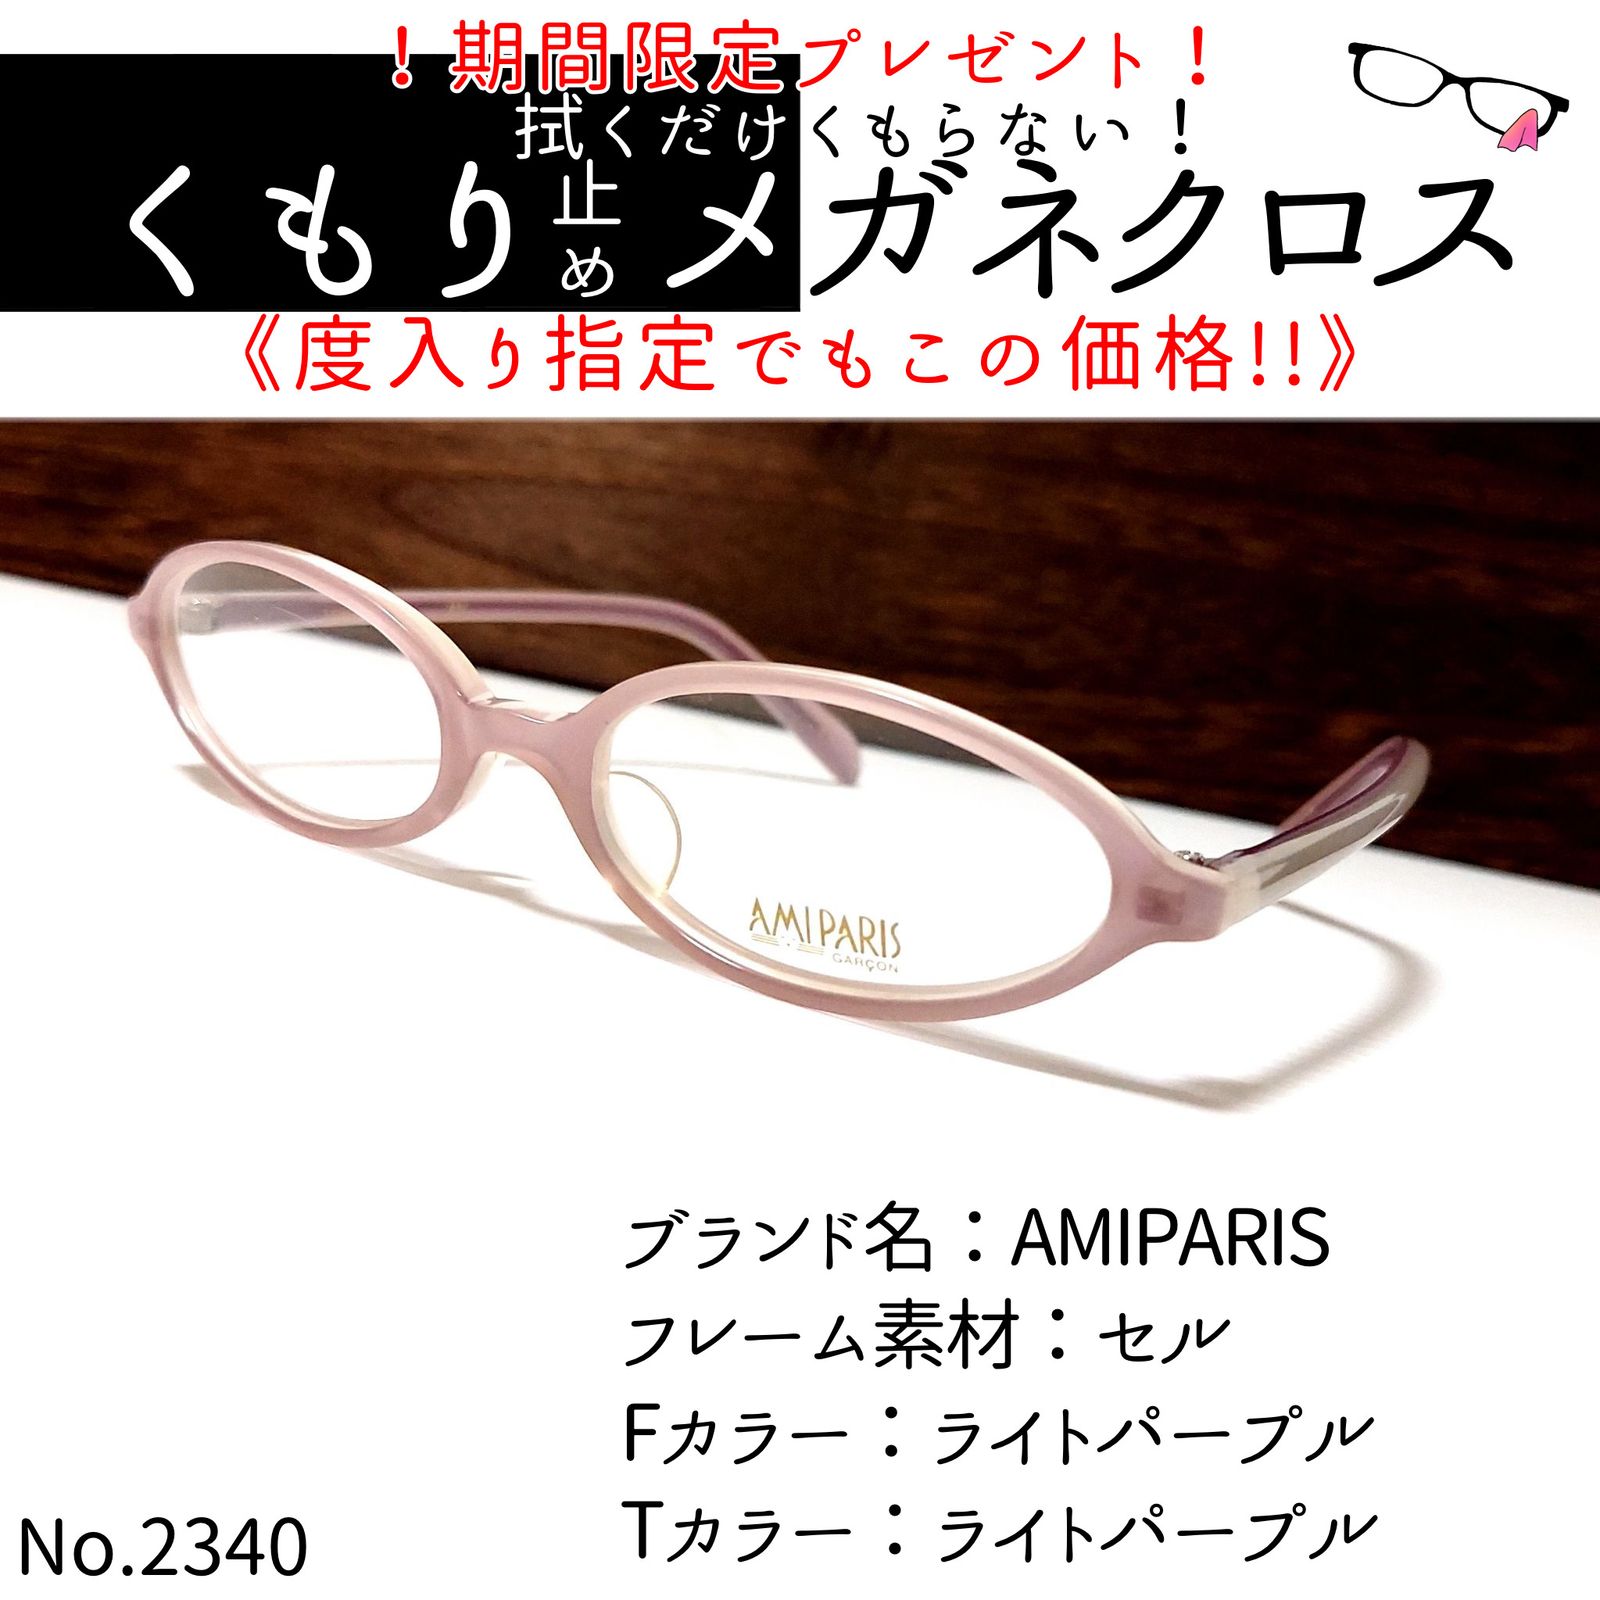 No.2340+メガネ AMIPARIS【度数入り込み価格】 - メルカリ